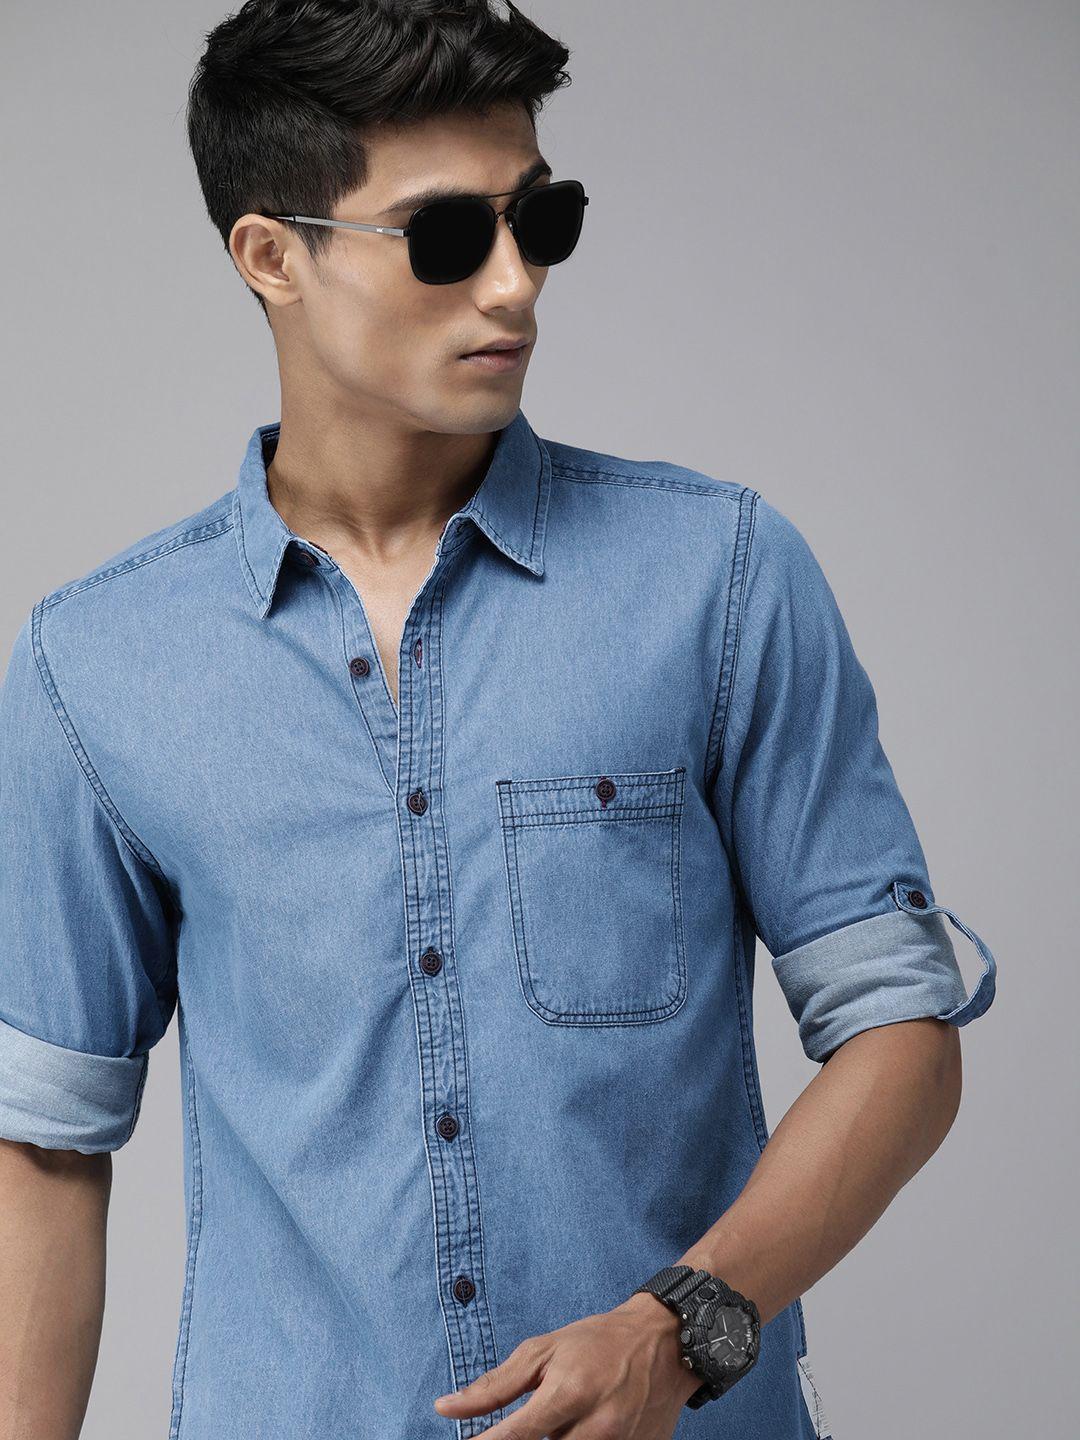 The Roadster Lifestyle Co Men Blue Solid Cotton Denim Shirt